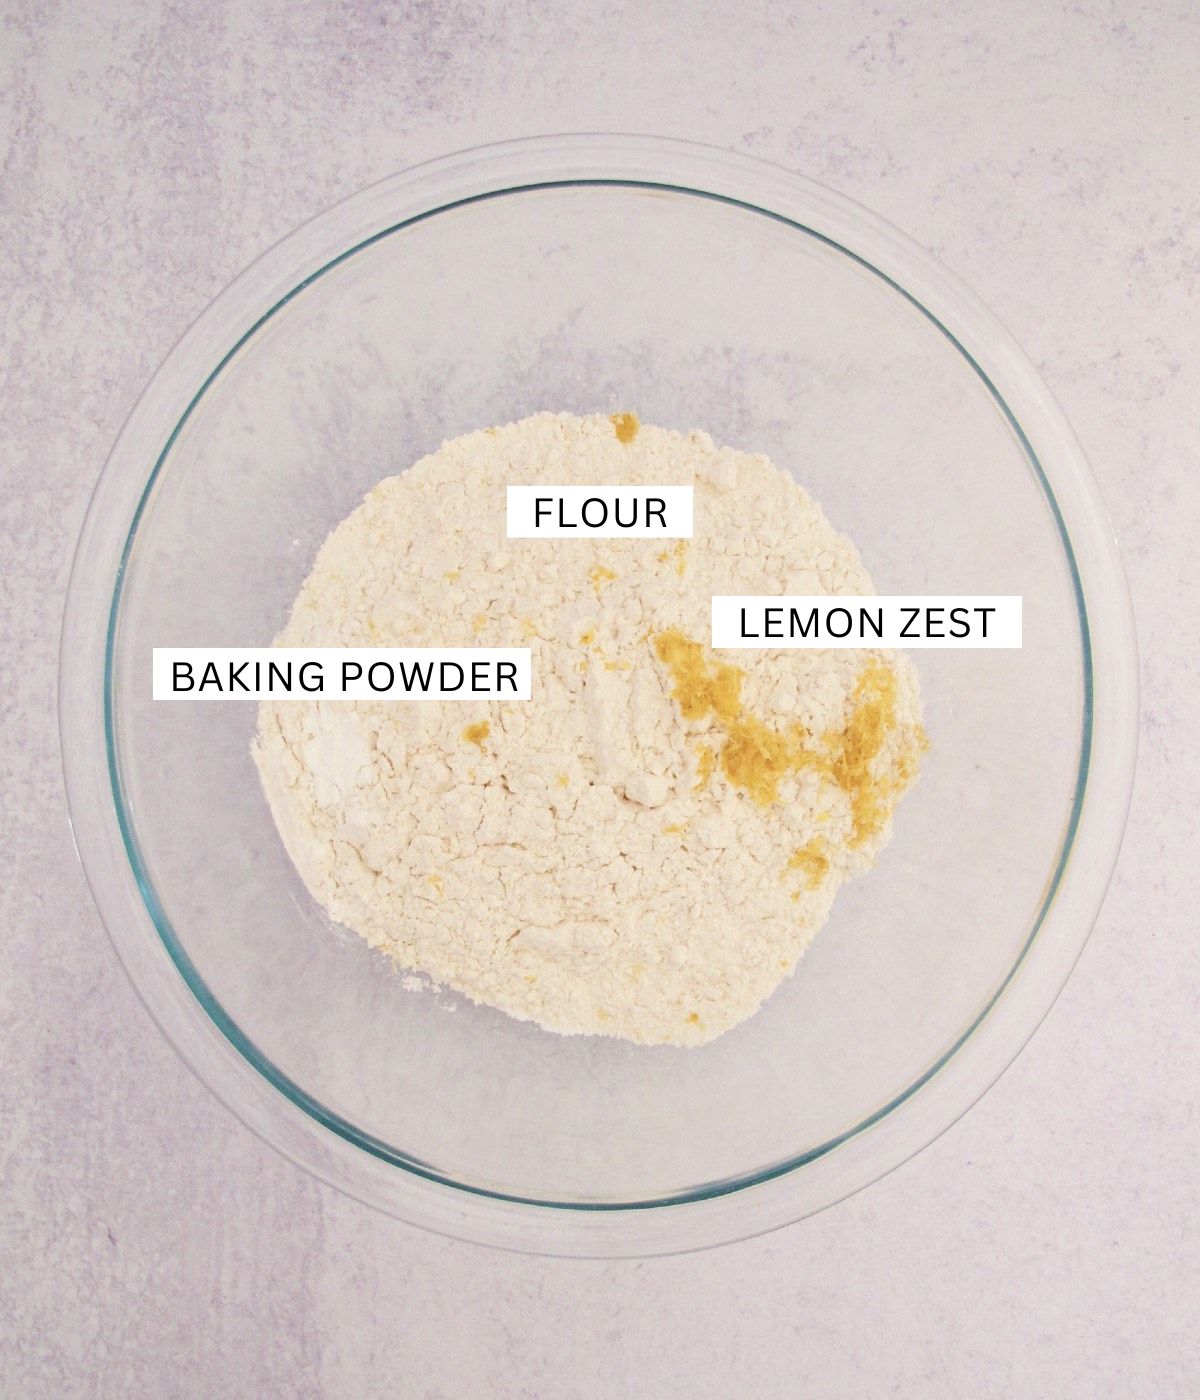 flour, baking powder, and lemon zest in a large glass bowl.